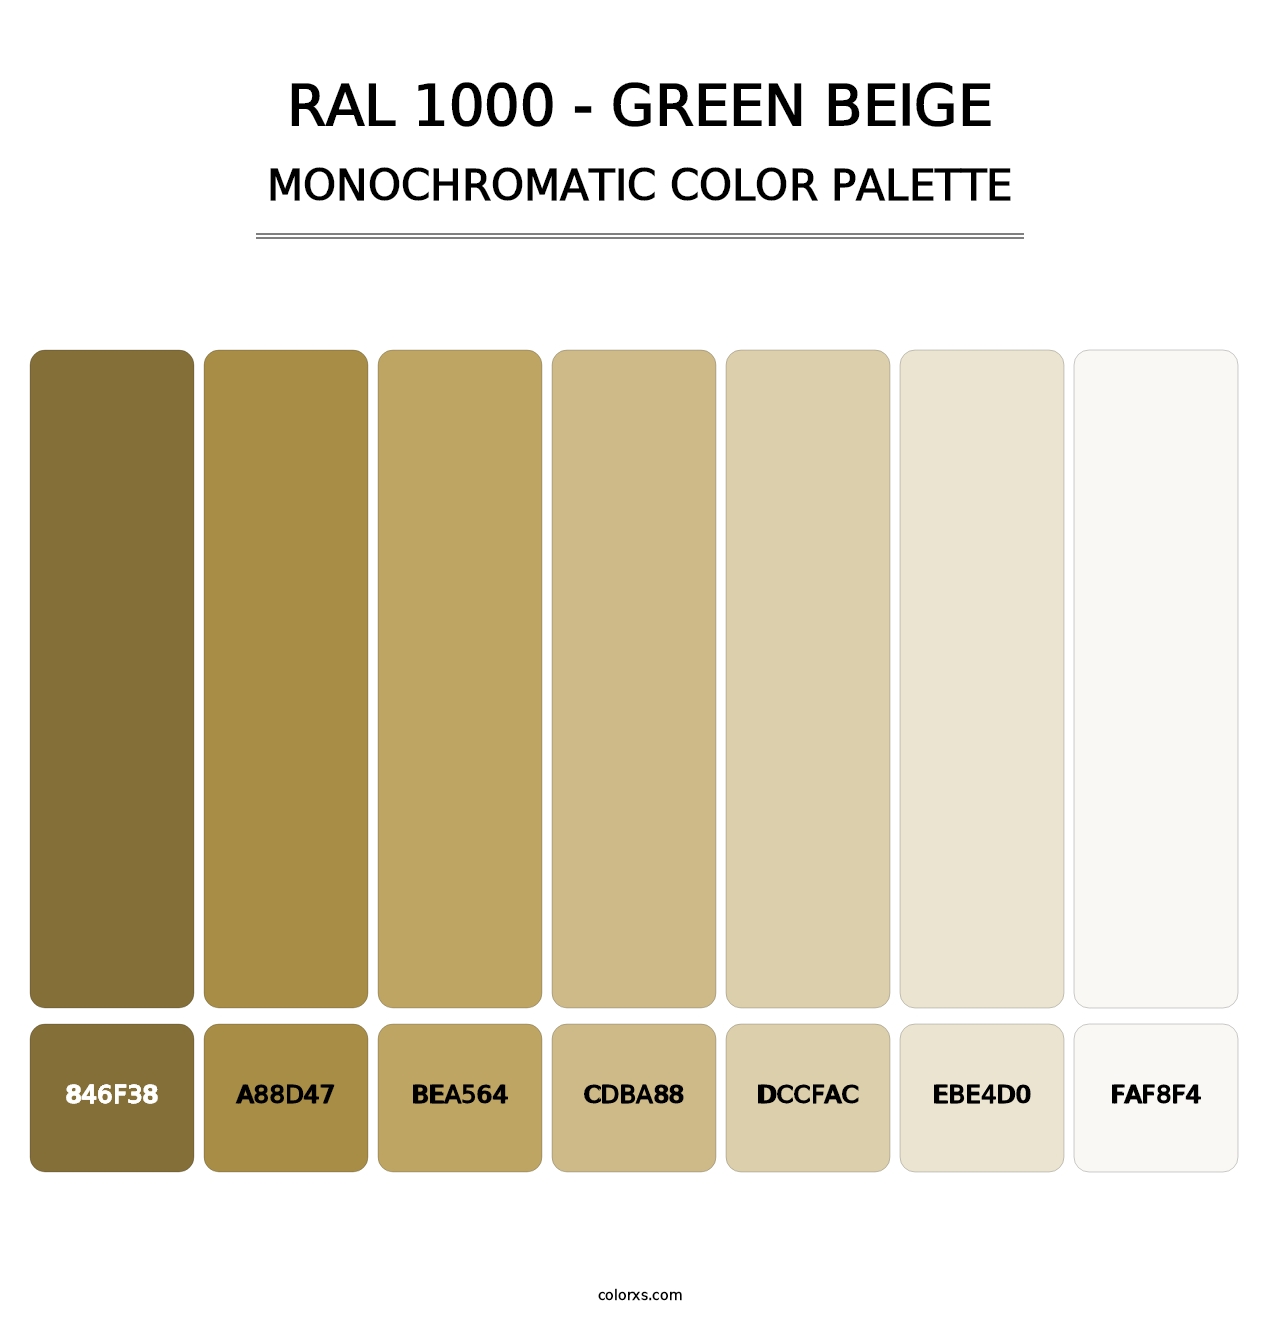 RAL 1000 - Green Beige - Monochromatic Color Palette